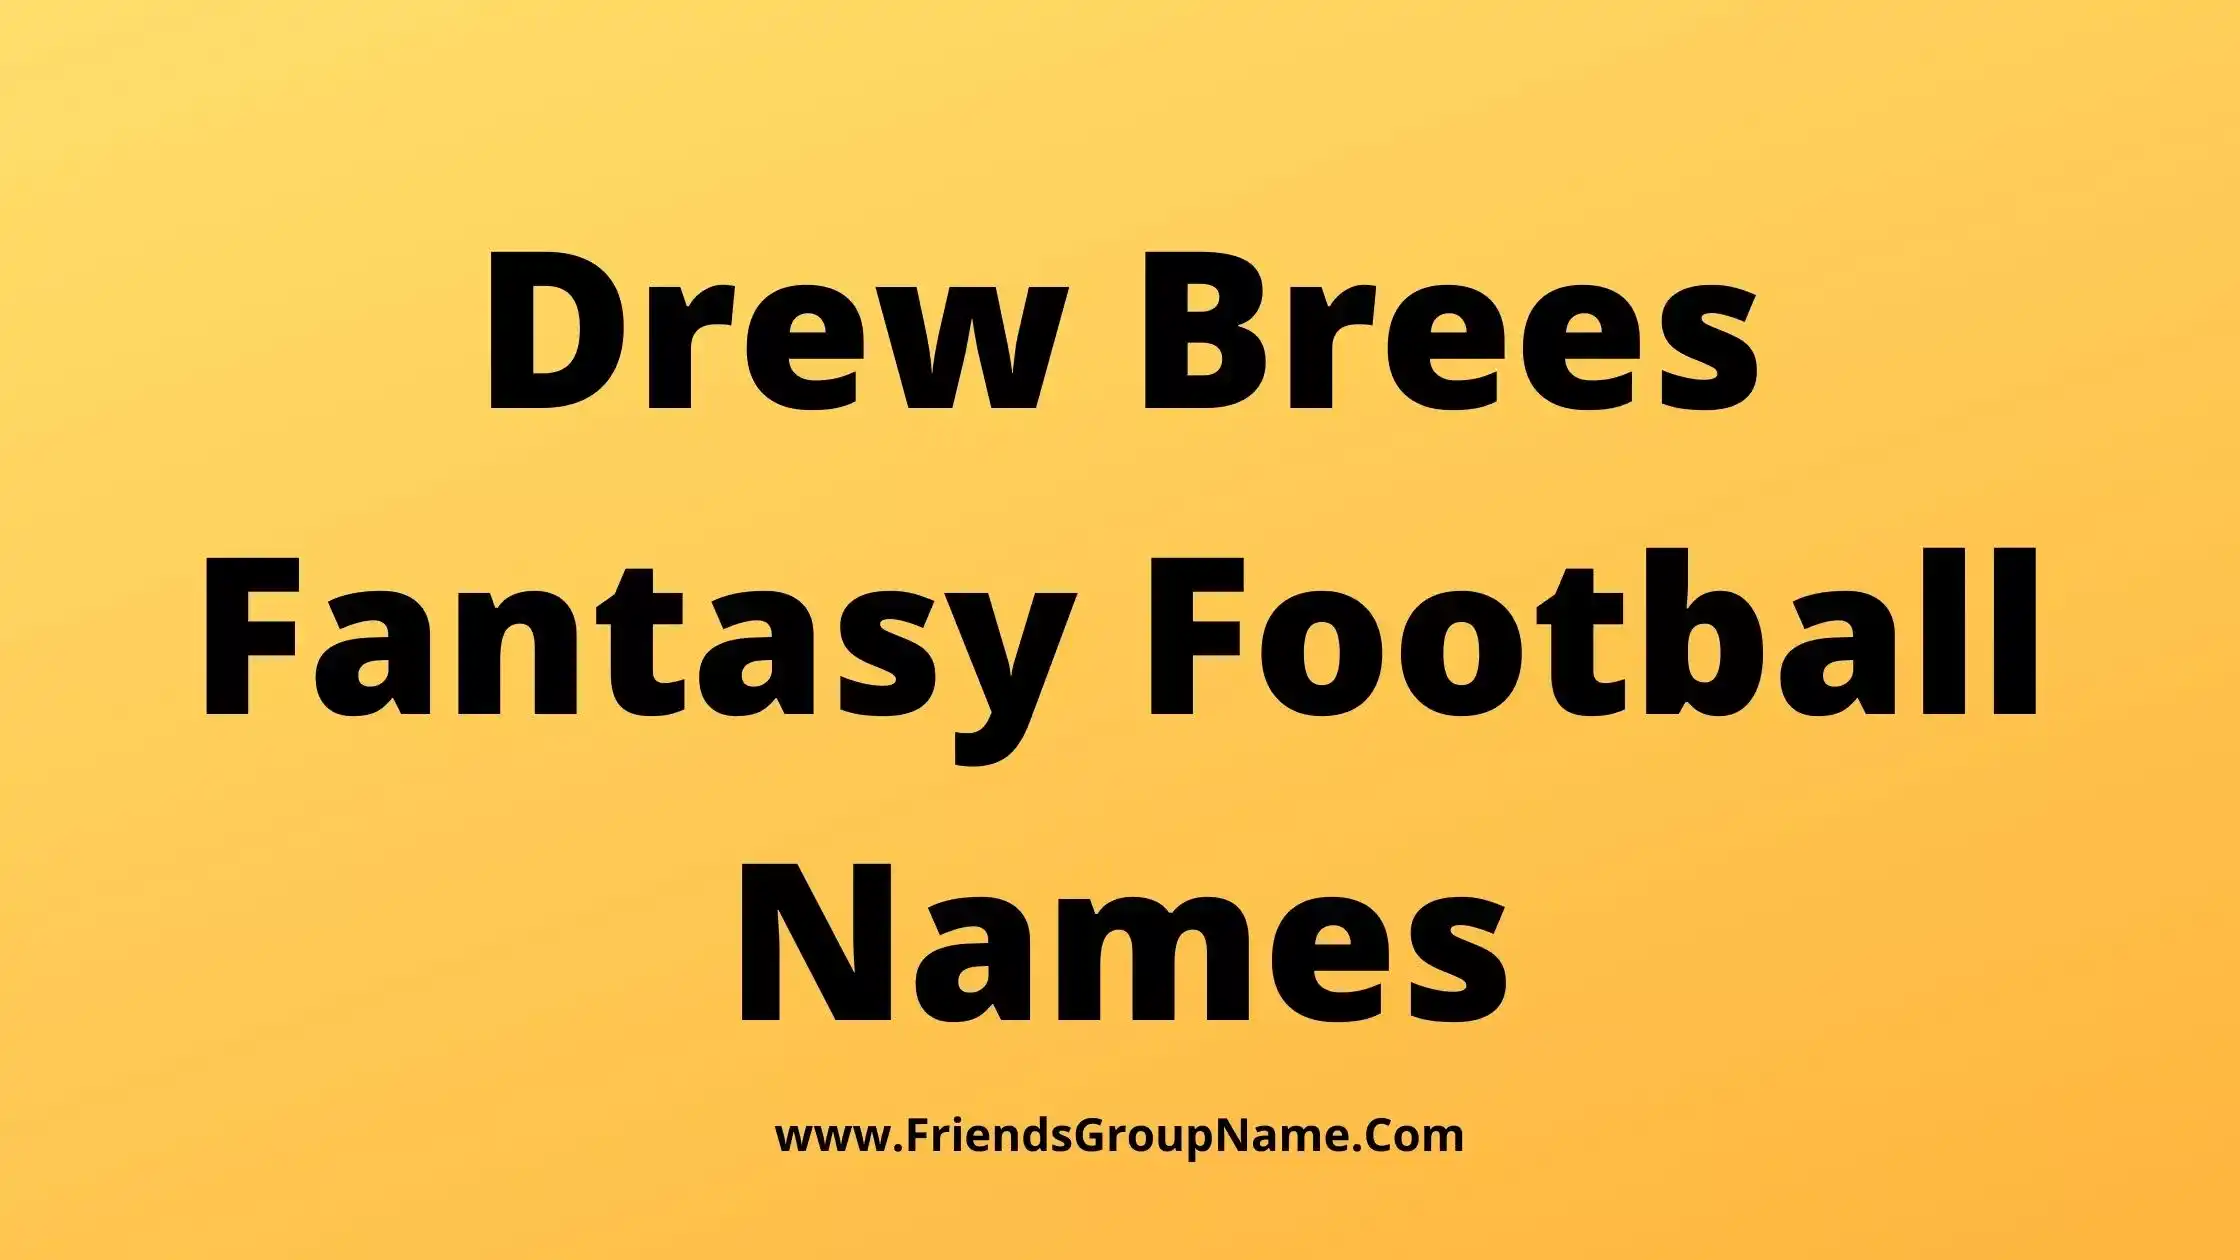 Drew Brees Fantasy Football Names